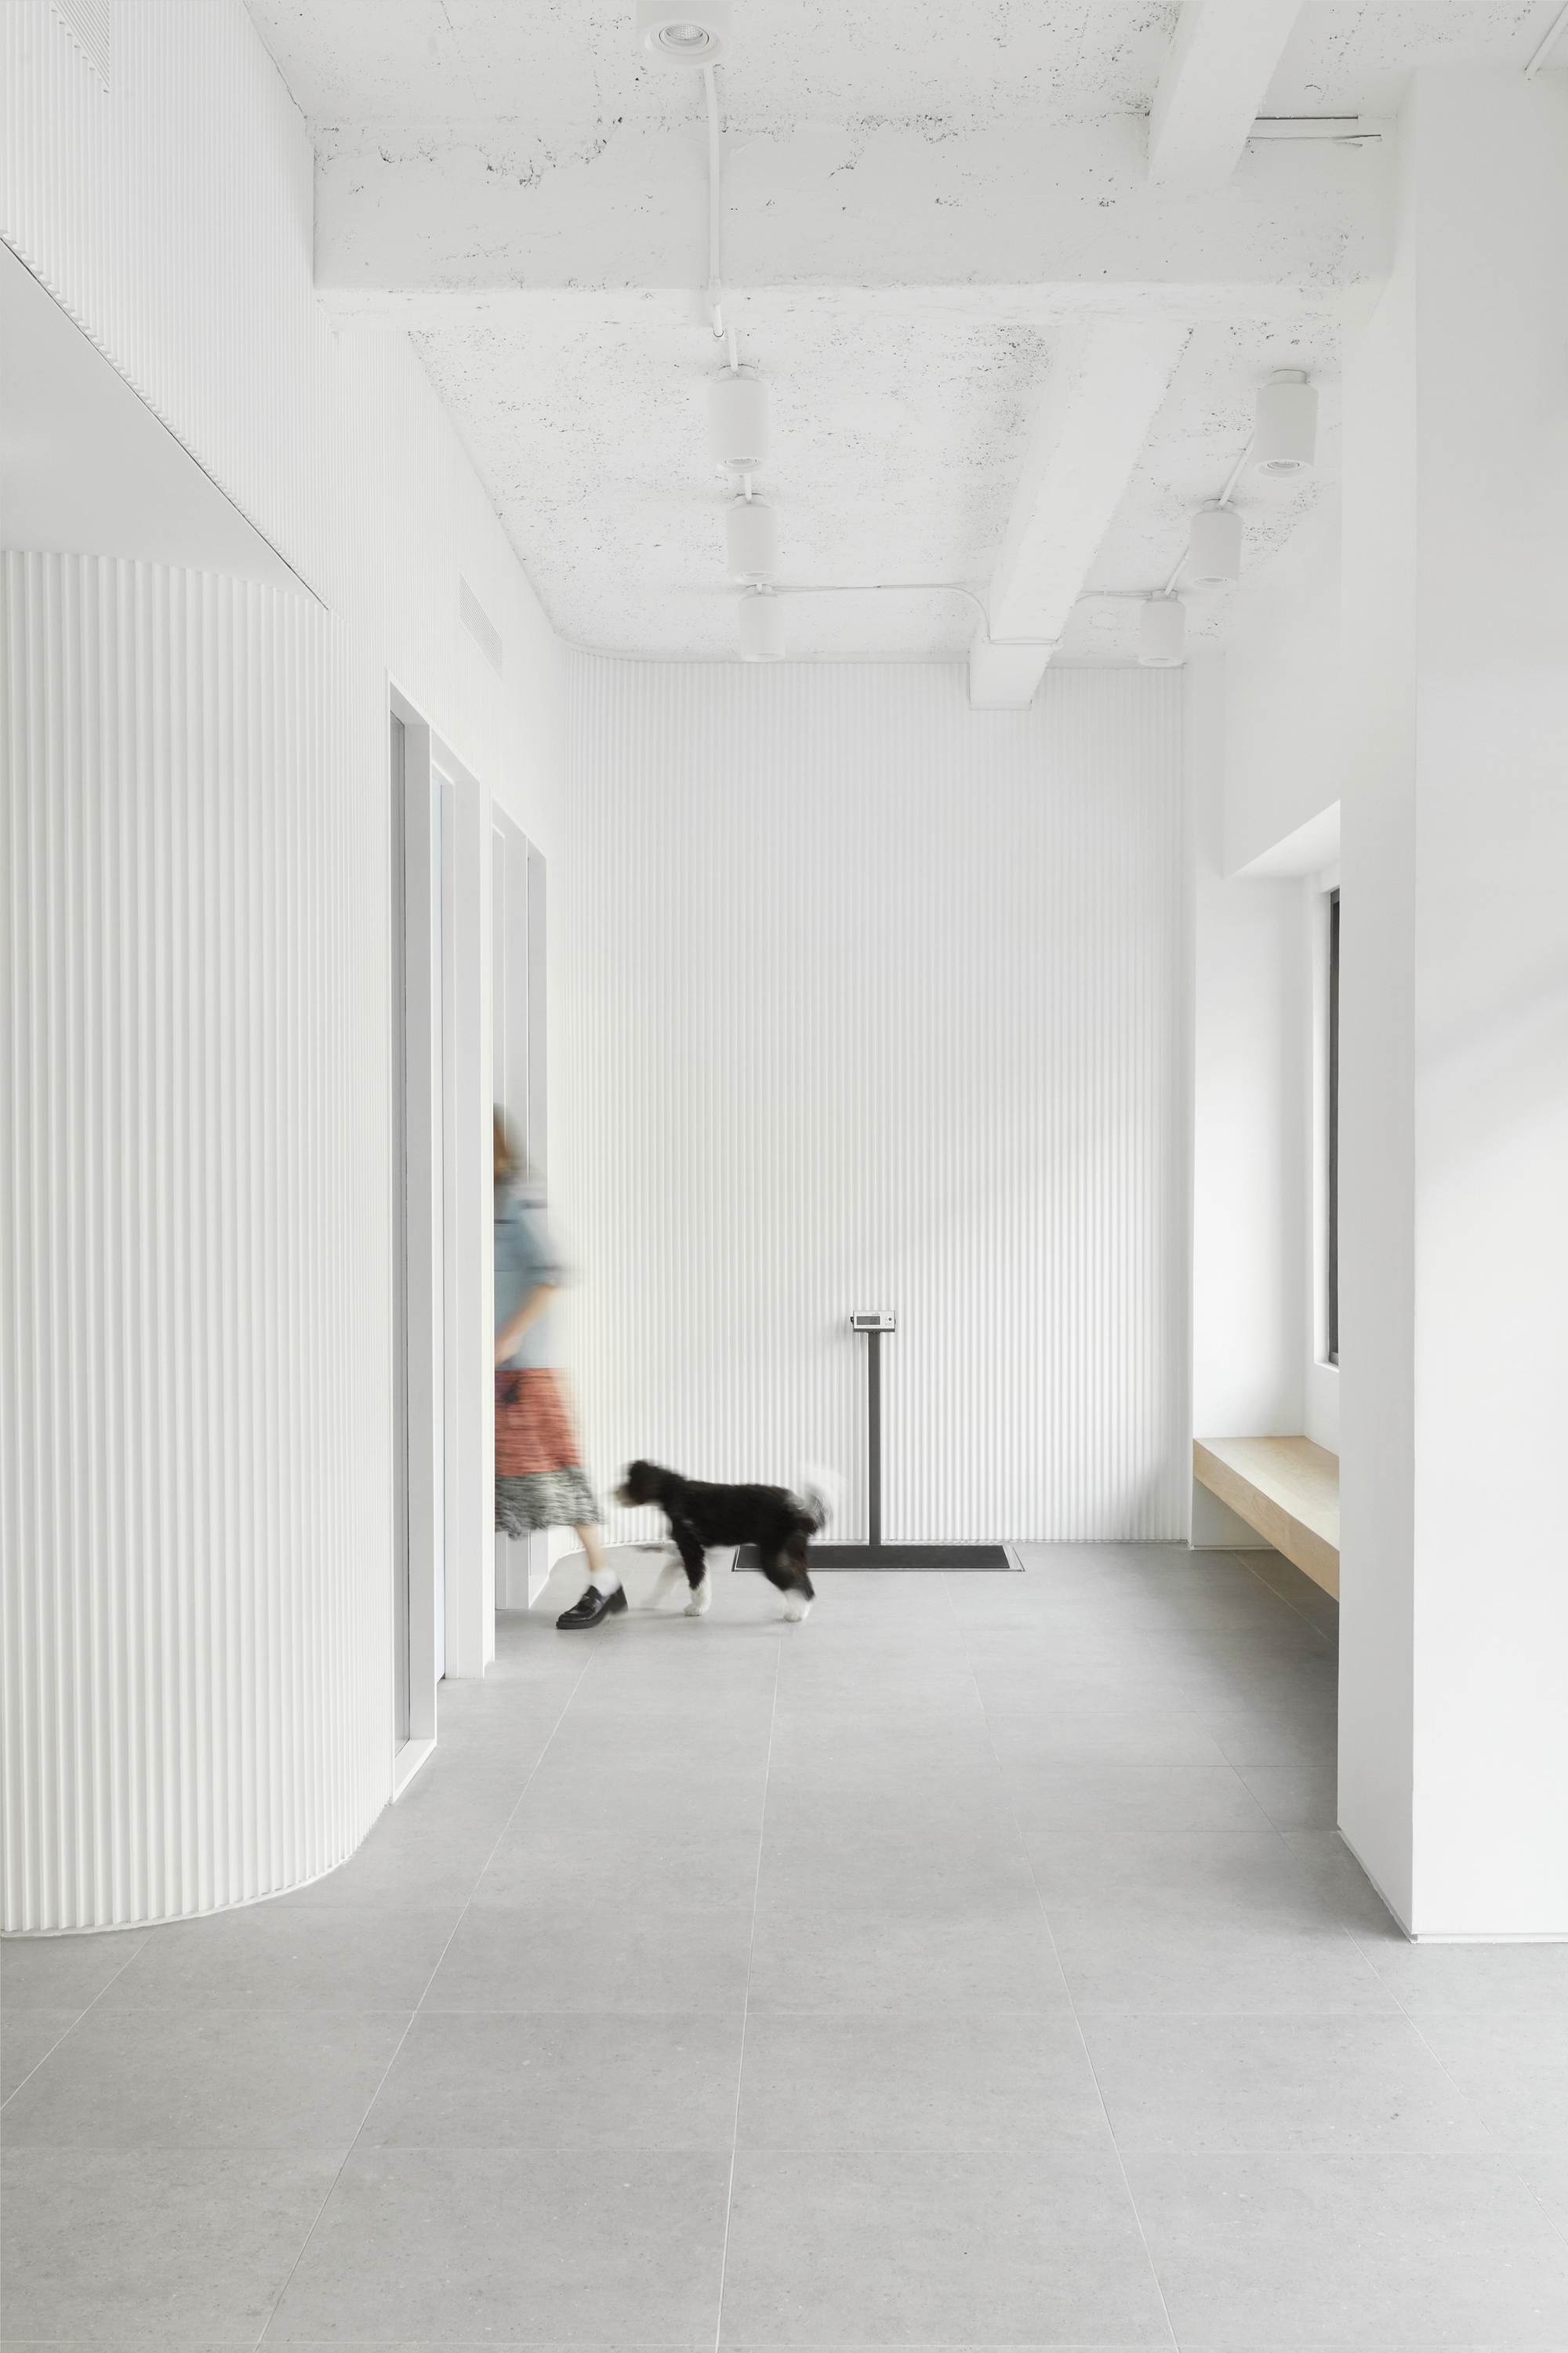 图片[3]|Brilliant Veterinary Care 室内设计 / Group Projects Architecture|ART-Arrakis | 建筑室内设计的创新与灵感